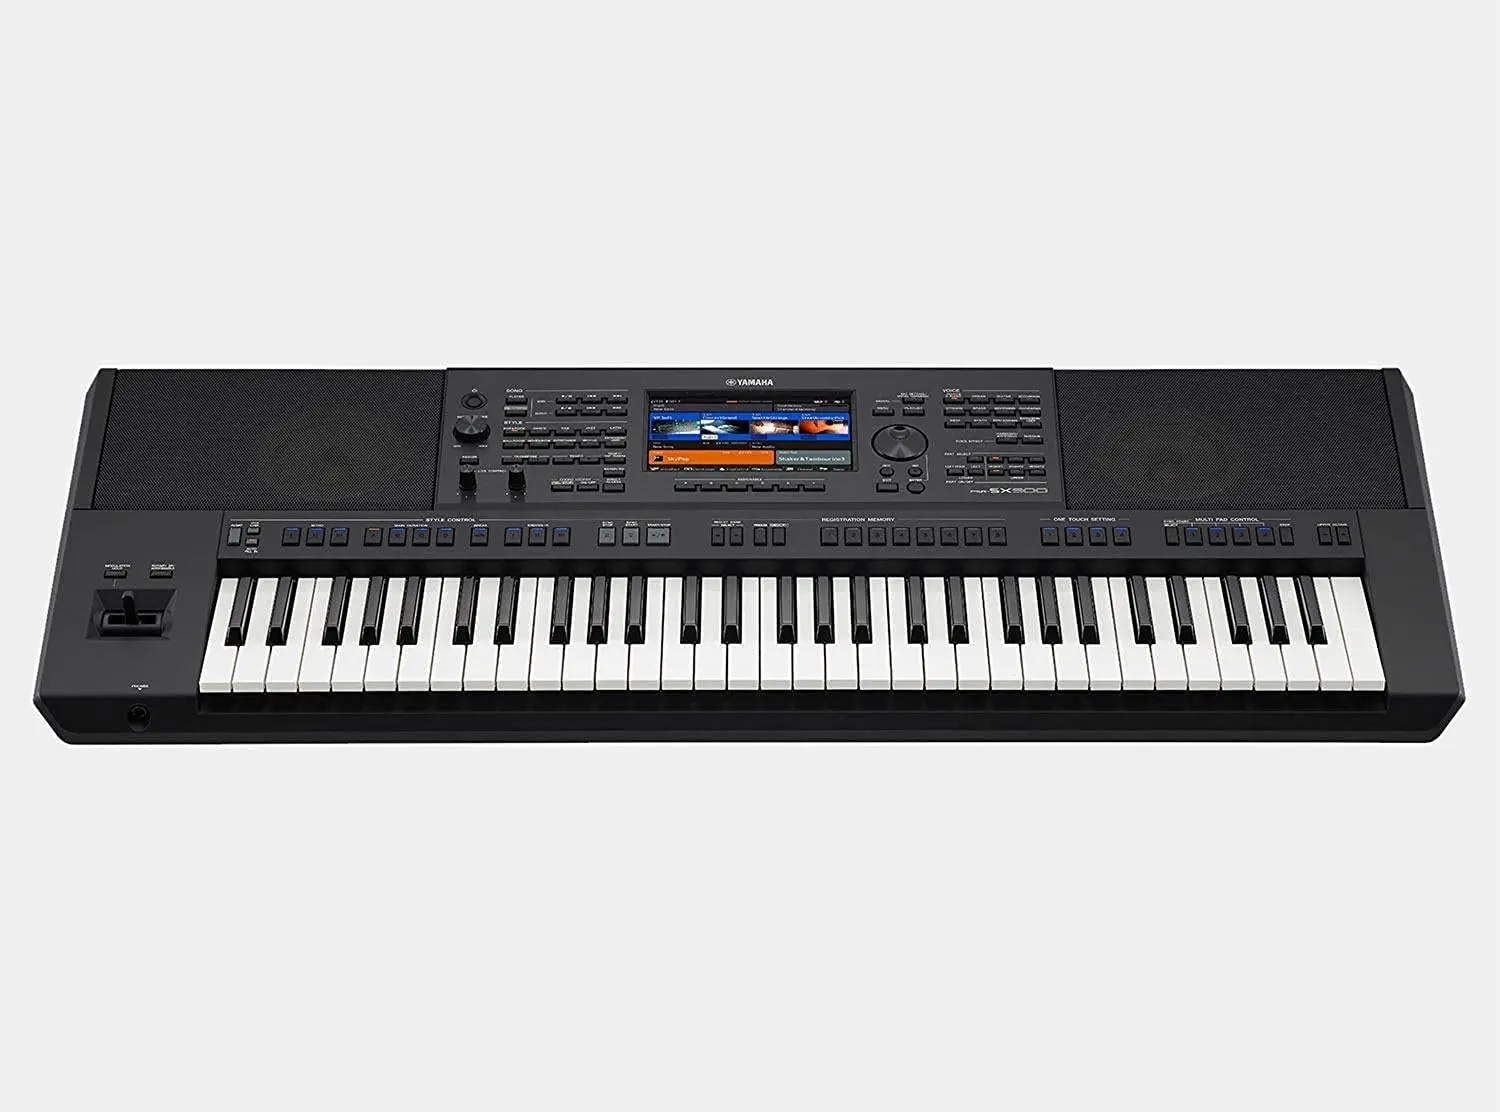 (НОВЫЙ бренд) Набор клавиатур PSR SX900 S975 SX700 S970 Deluxe keyboards5